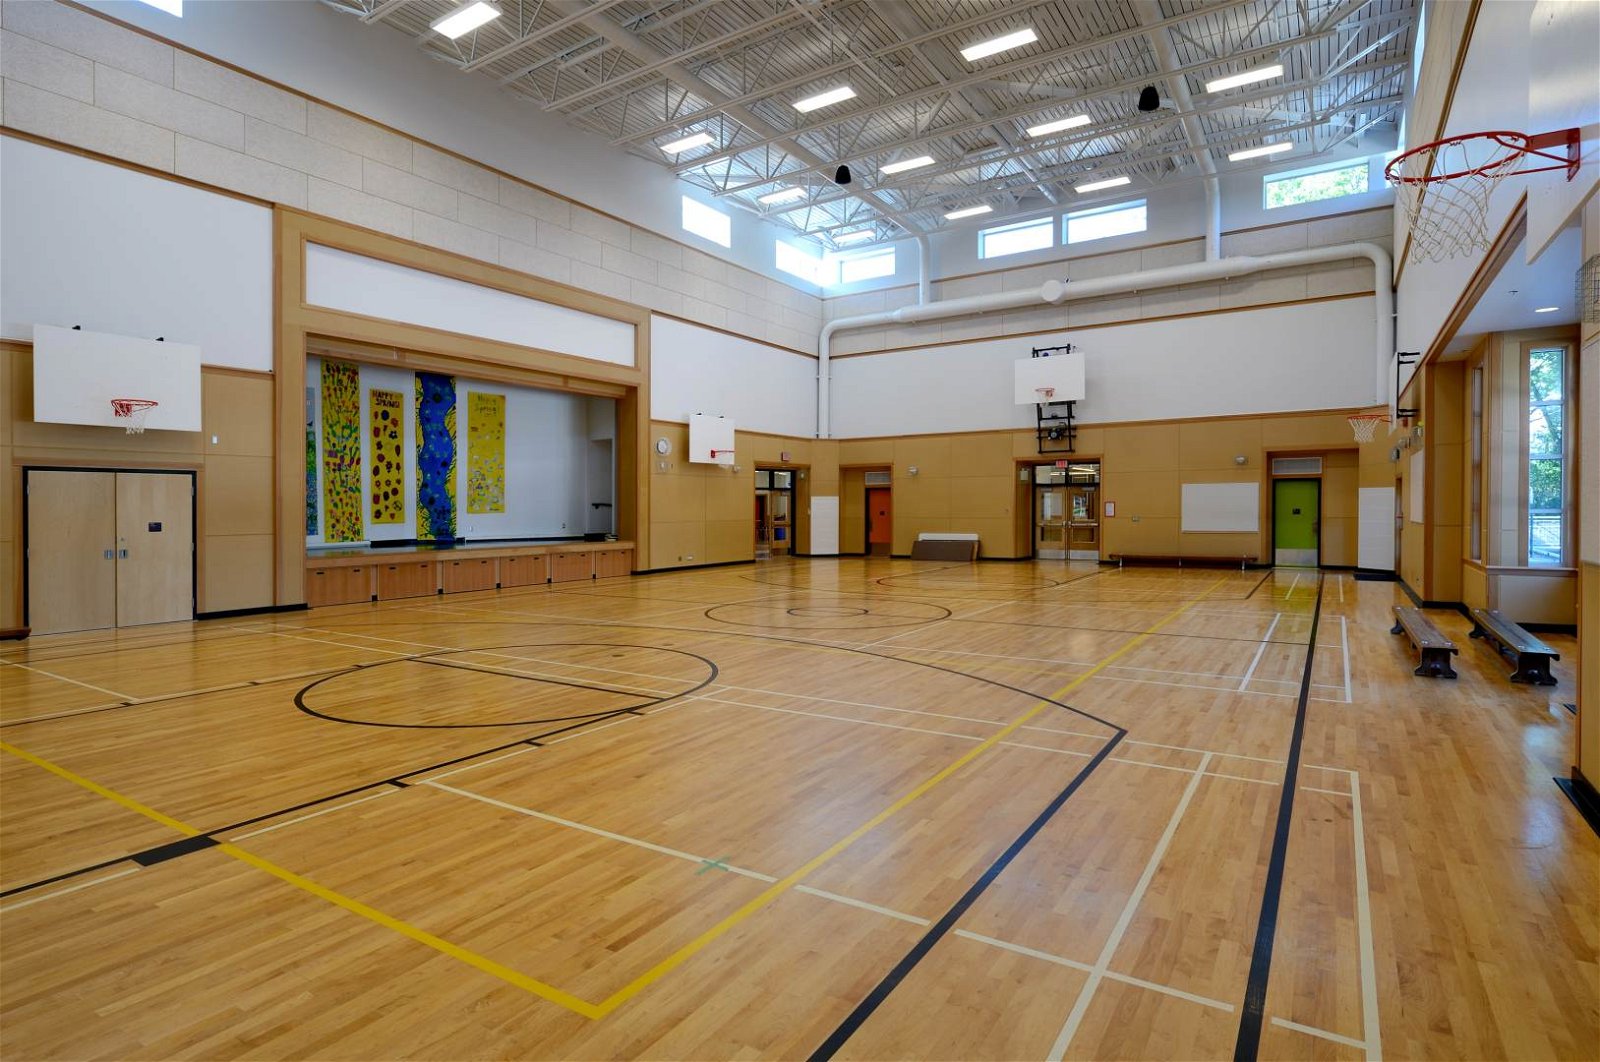 Lord Kitchener Elementary School